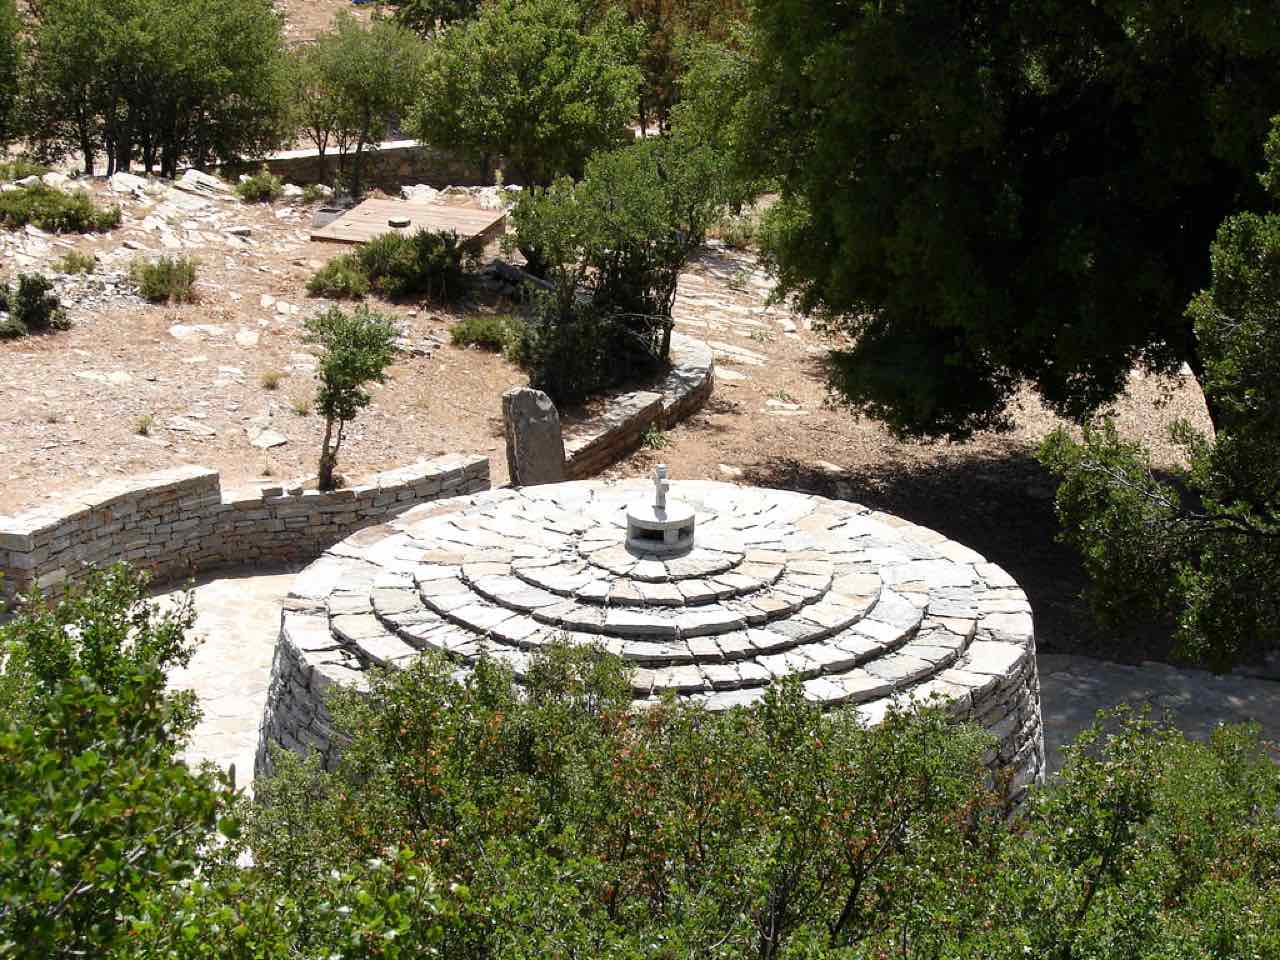 yakinthia festival anogia crete, Gods and mortals in Psiloritis Mount, 20 years Yakinthia, yakinthia music festival crete greece, events anogia crete